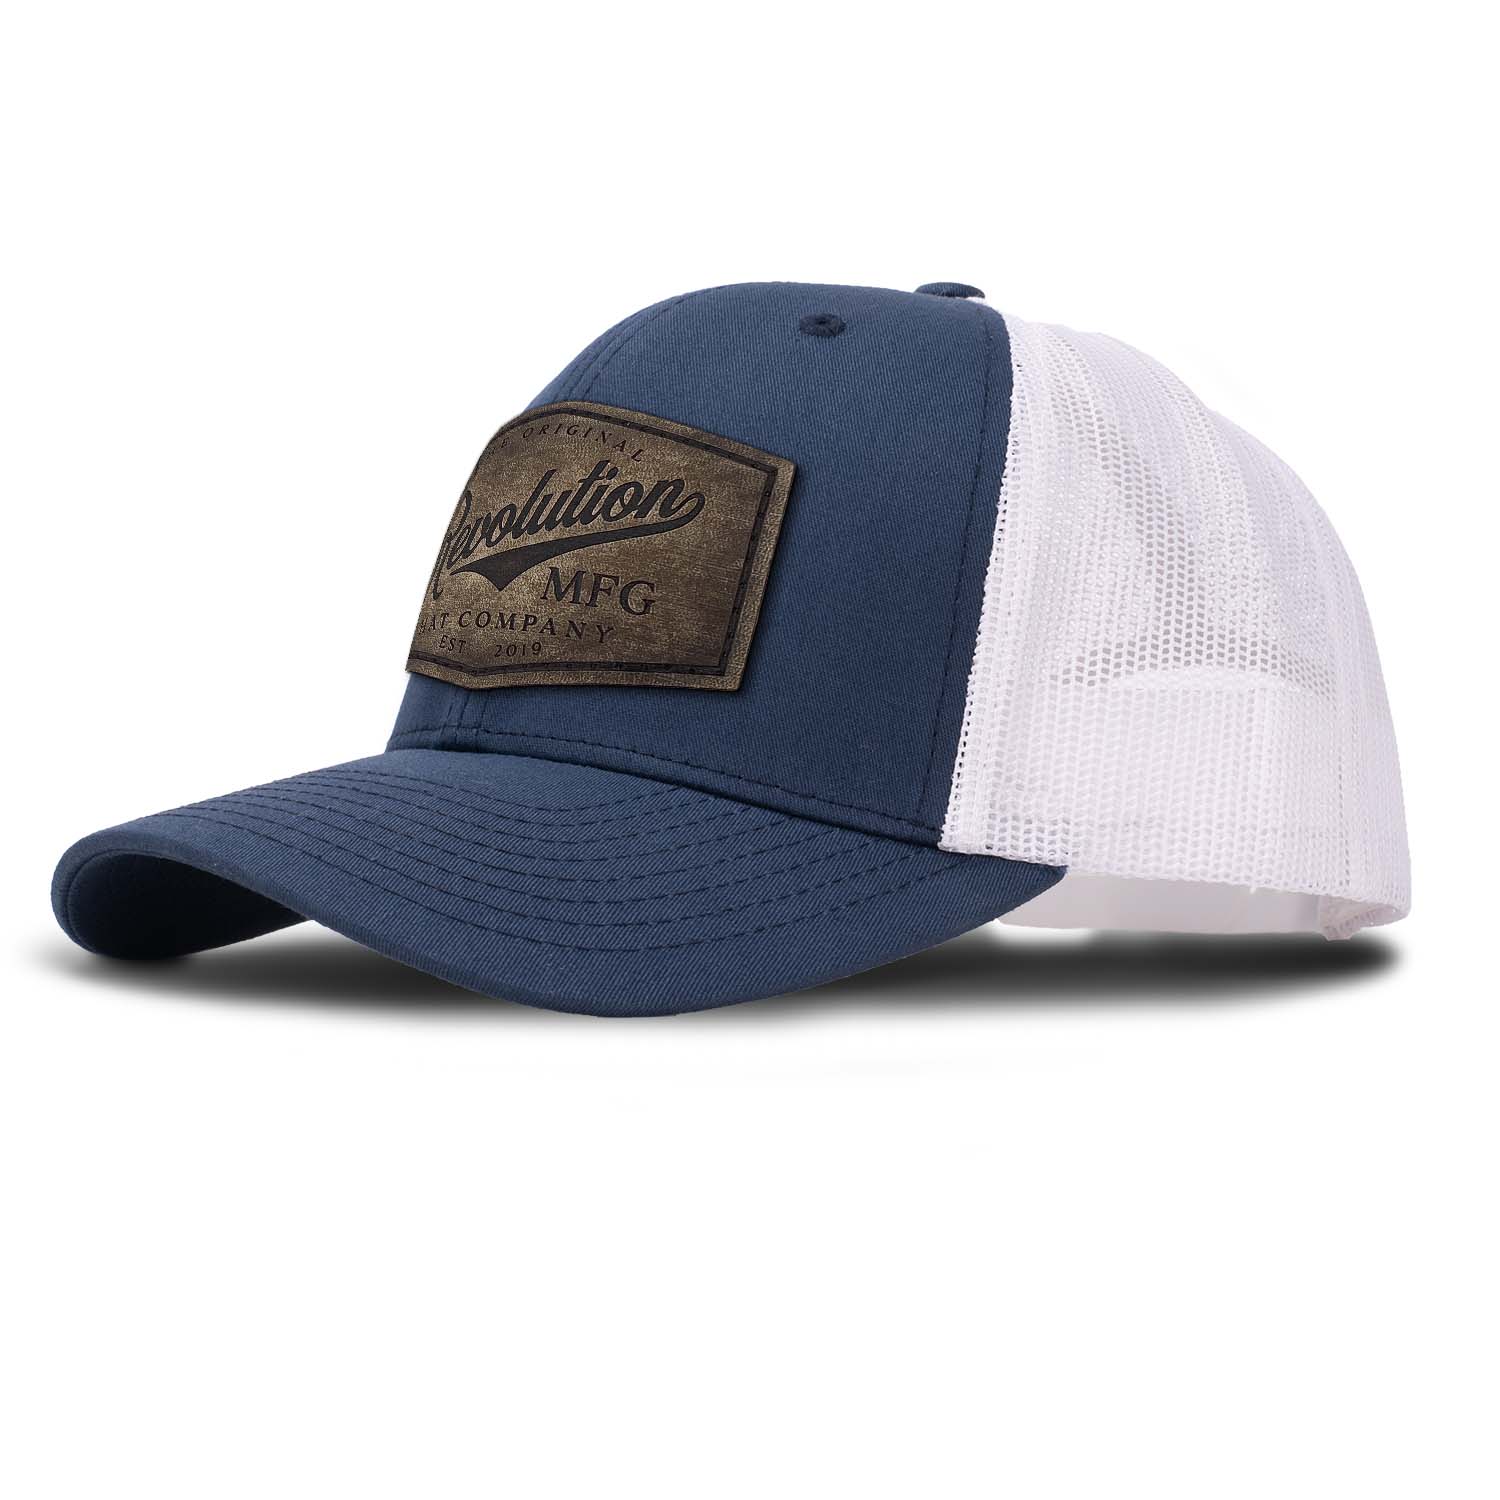 Co Trucker Mfg Shop Revolution Hat | Classic Revolution Vintage |